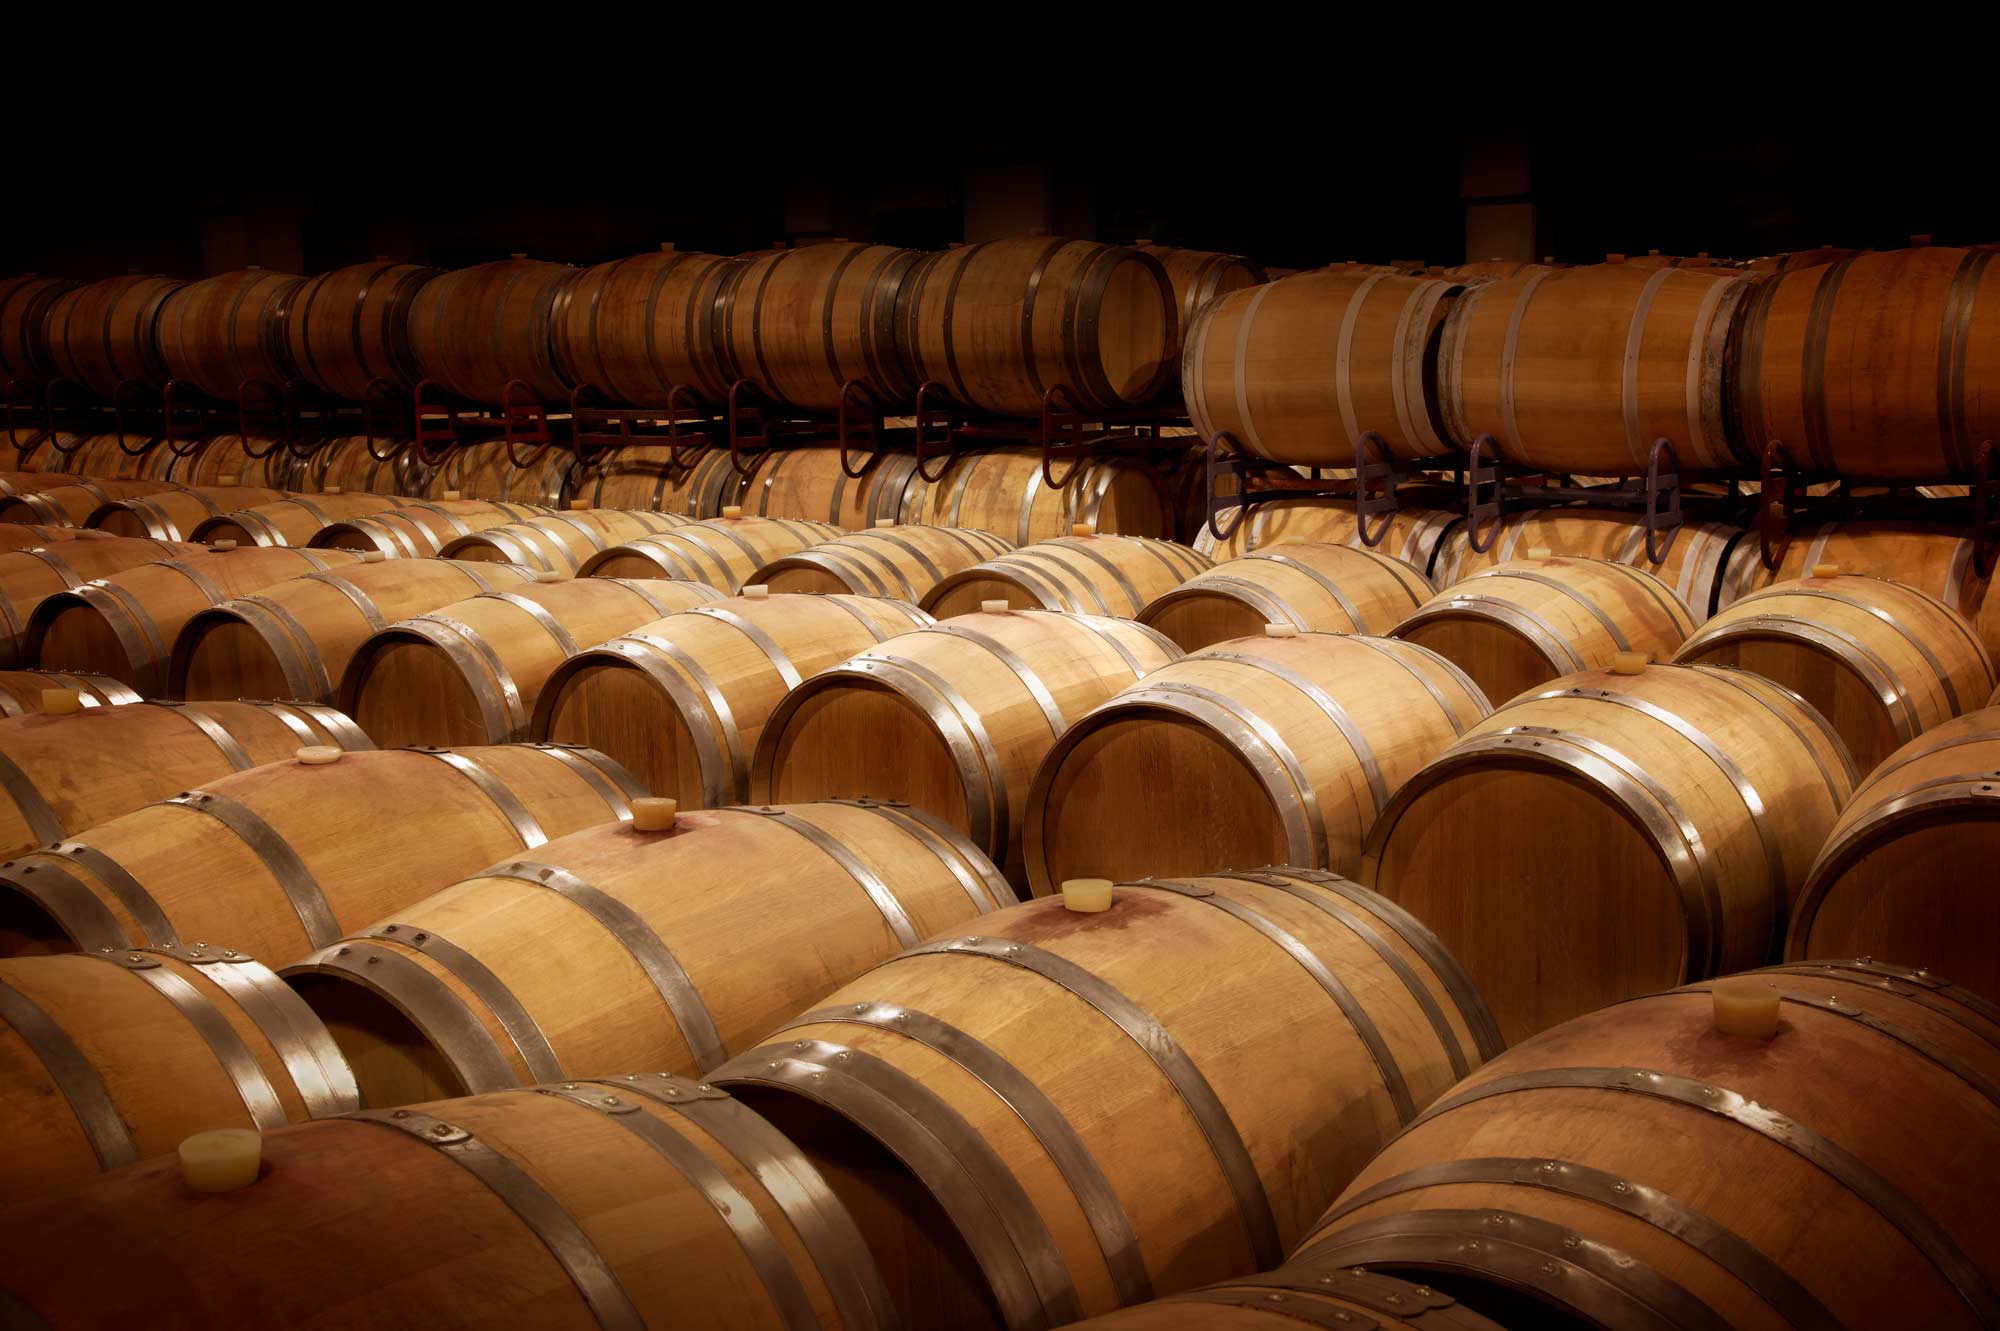 Rows of wine barrels